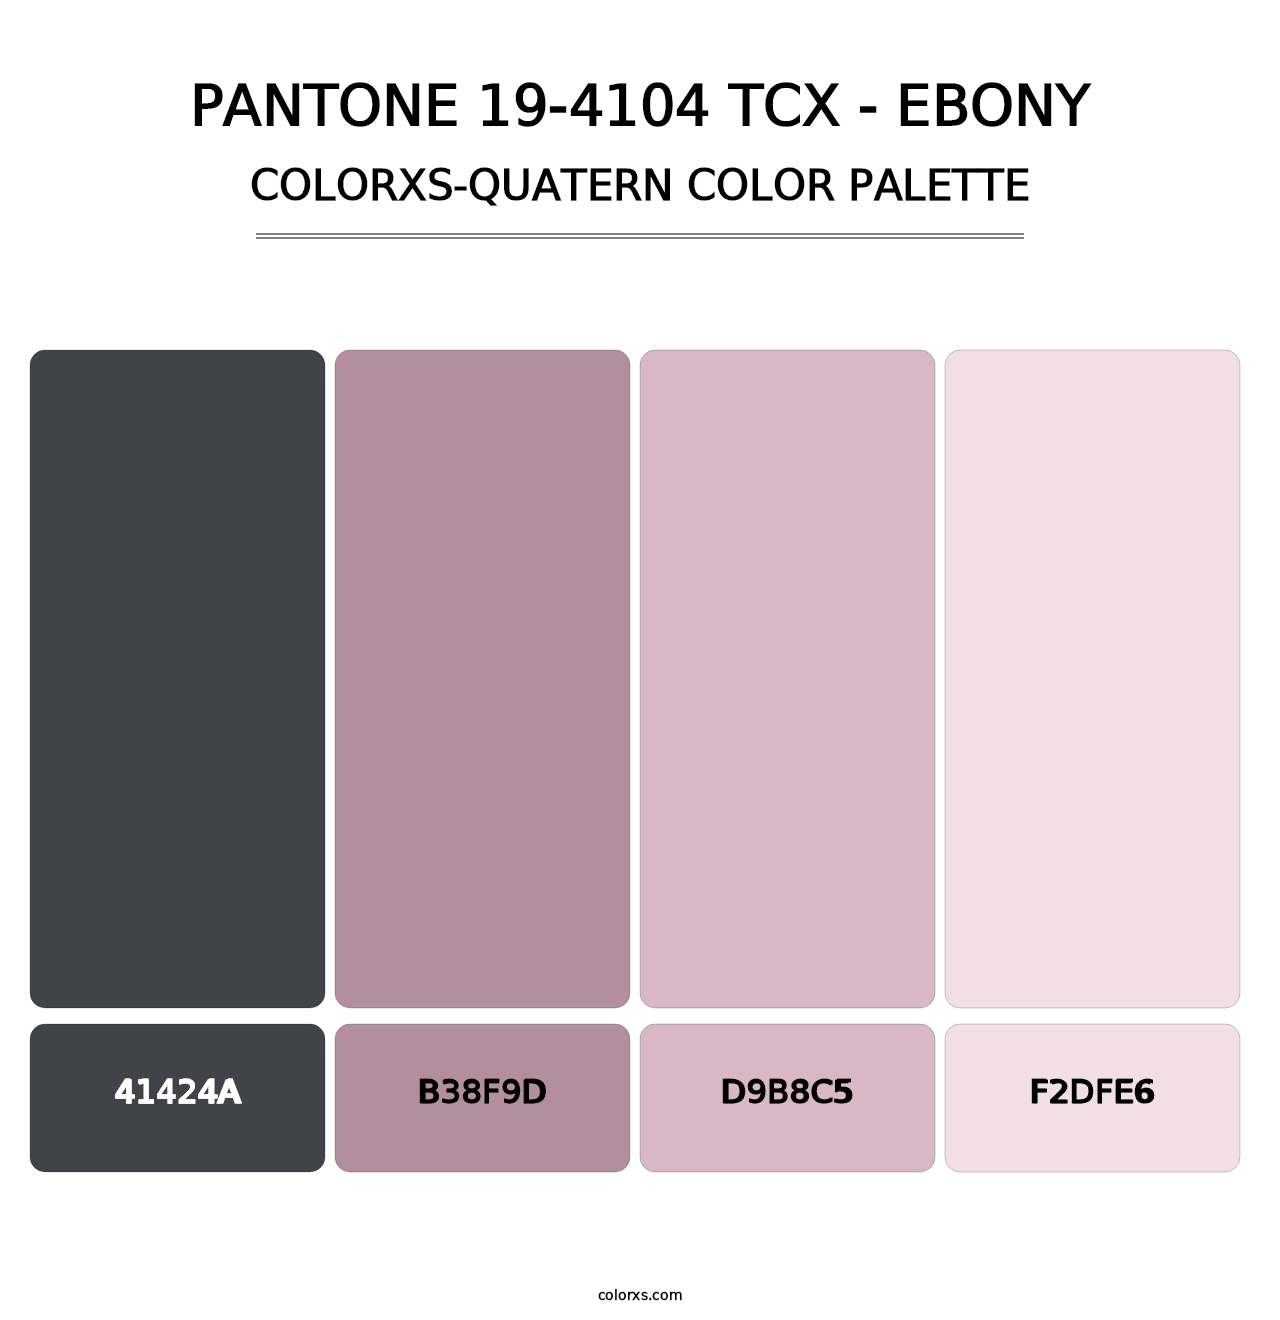 PANTONE 19-4104 TCX - Ebony - Colorxs Quatern Palette